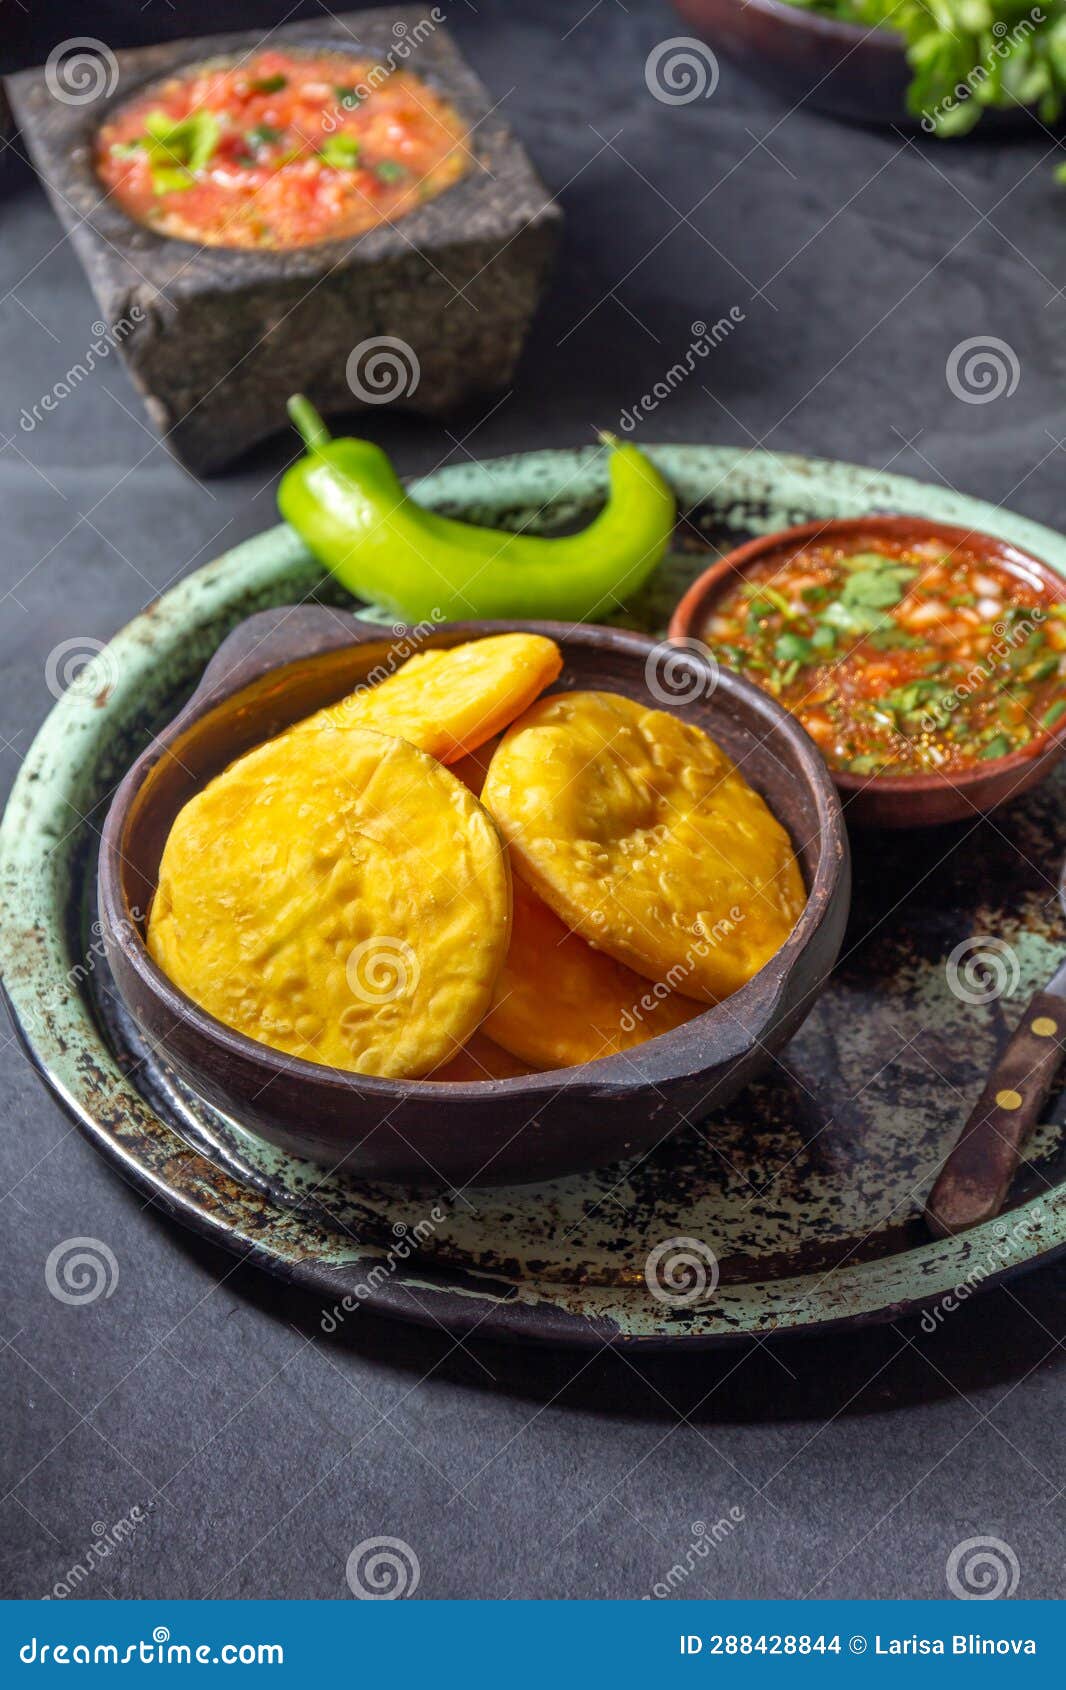 sopaipilla. latin american food. traditional chilean homemade pumpkin sopaipillas with typical salsas - chancho en